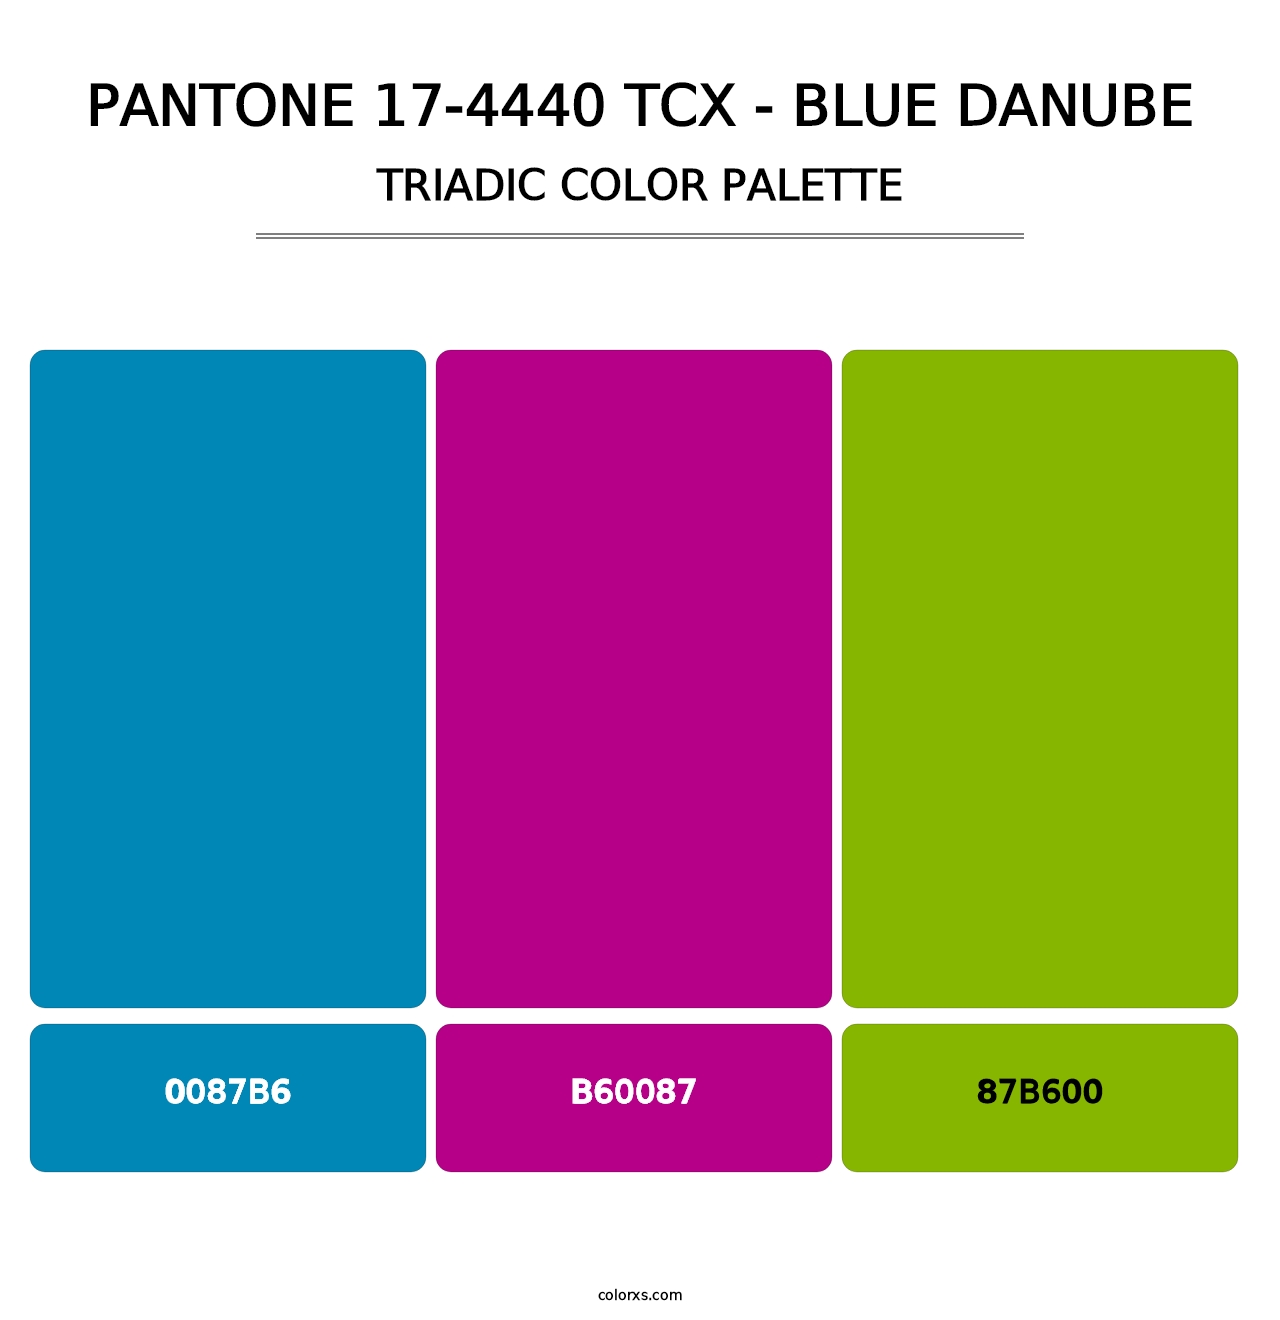 PANTONE 17-4440 TCX - Blue Danube - Triadic Color Palette